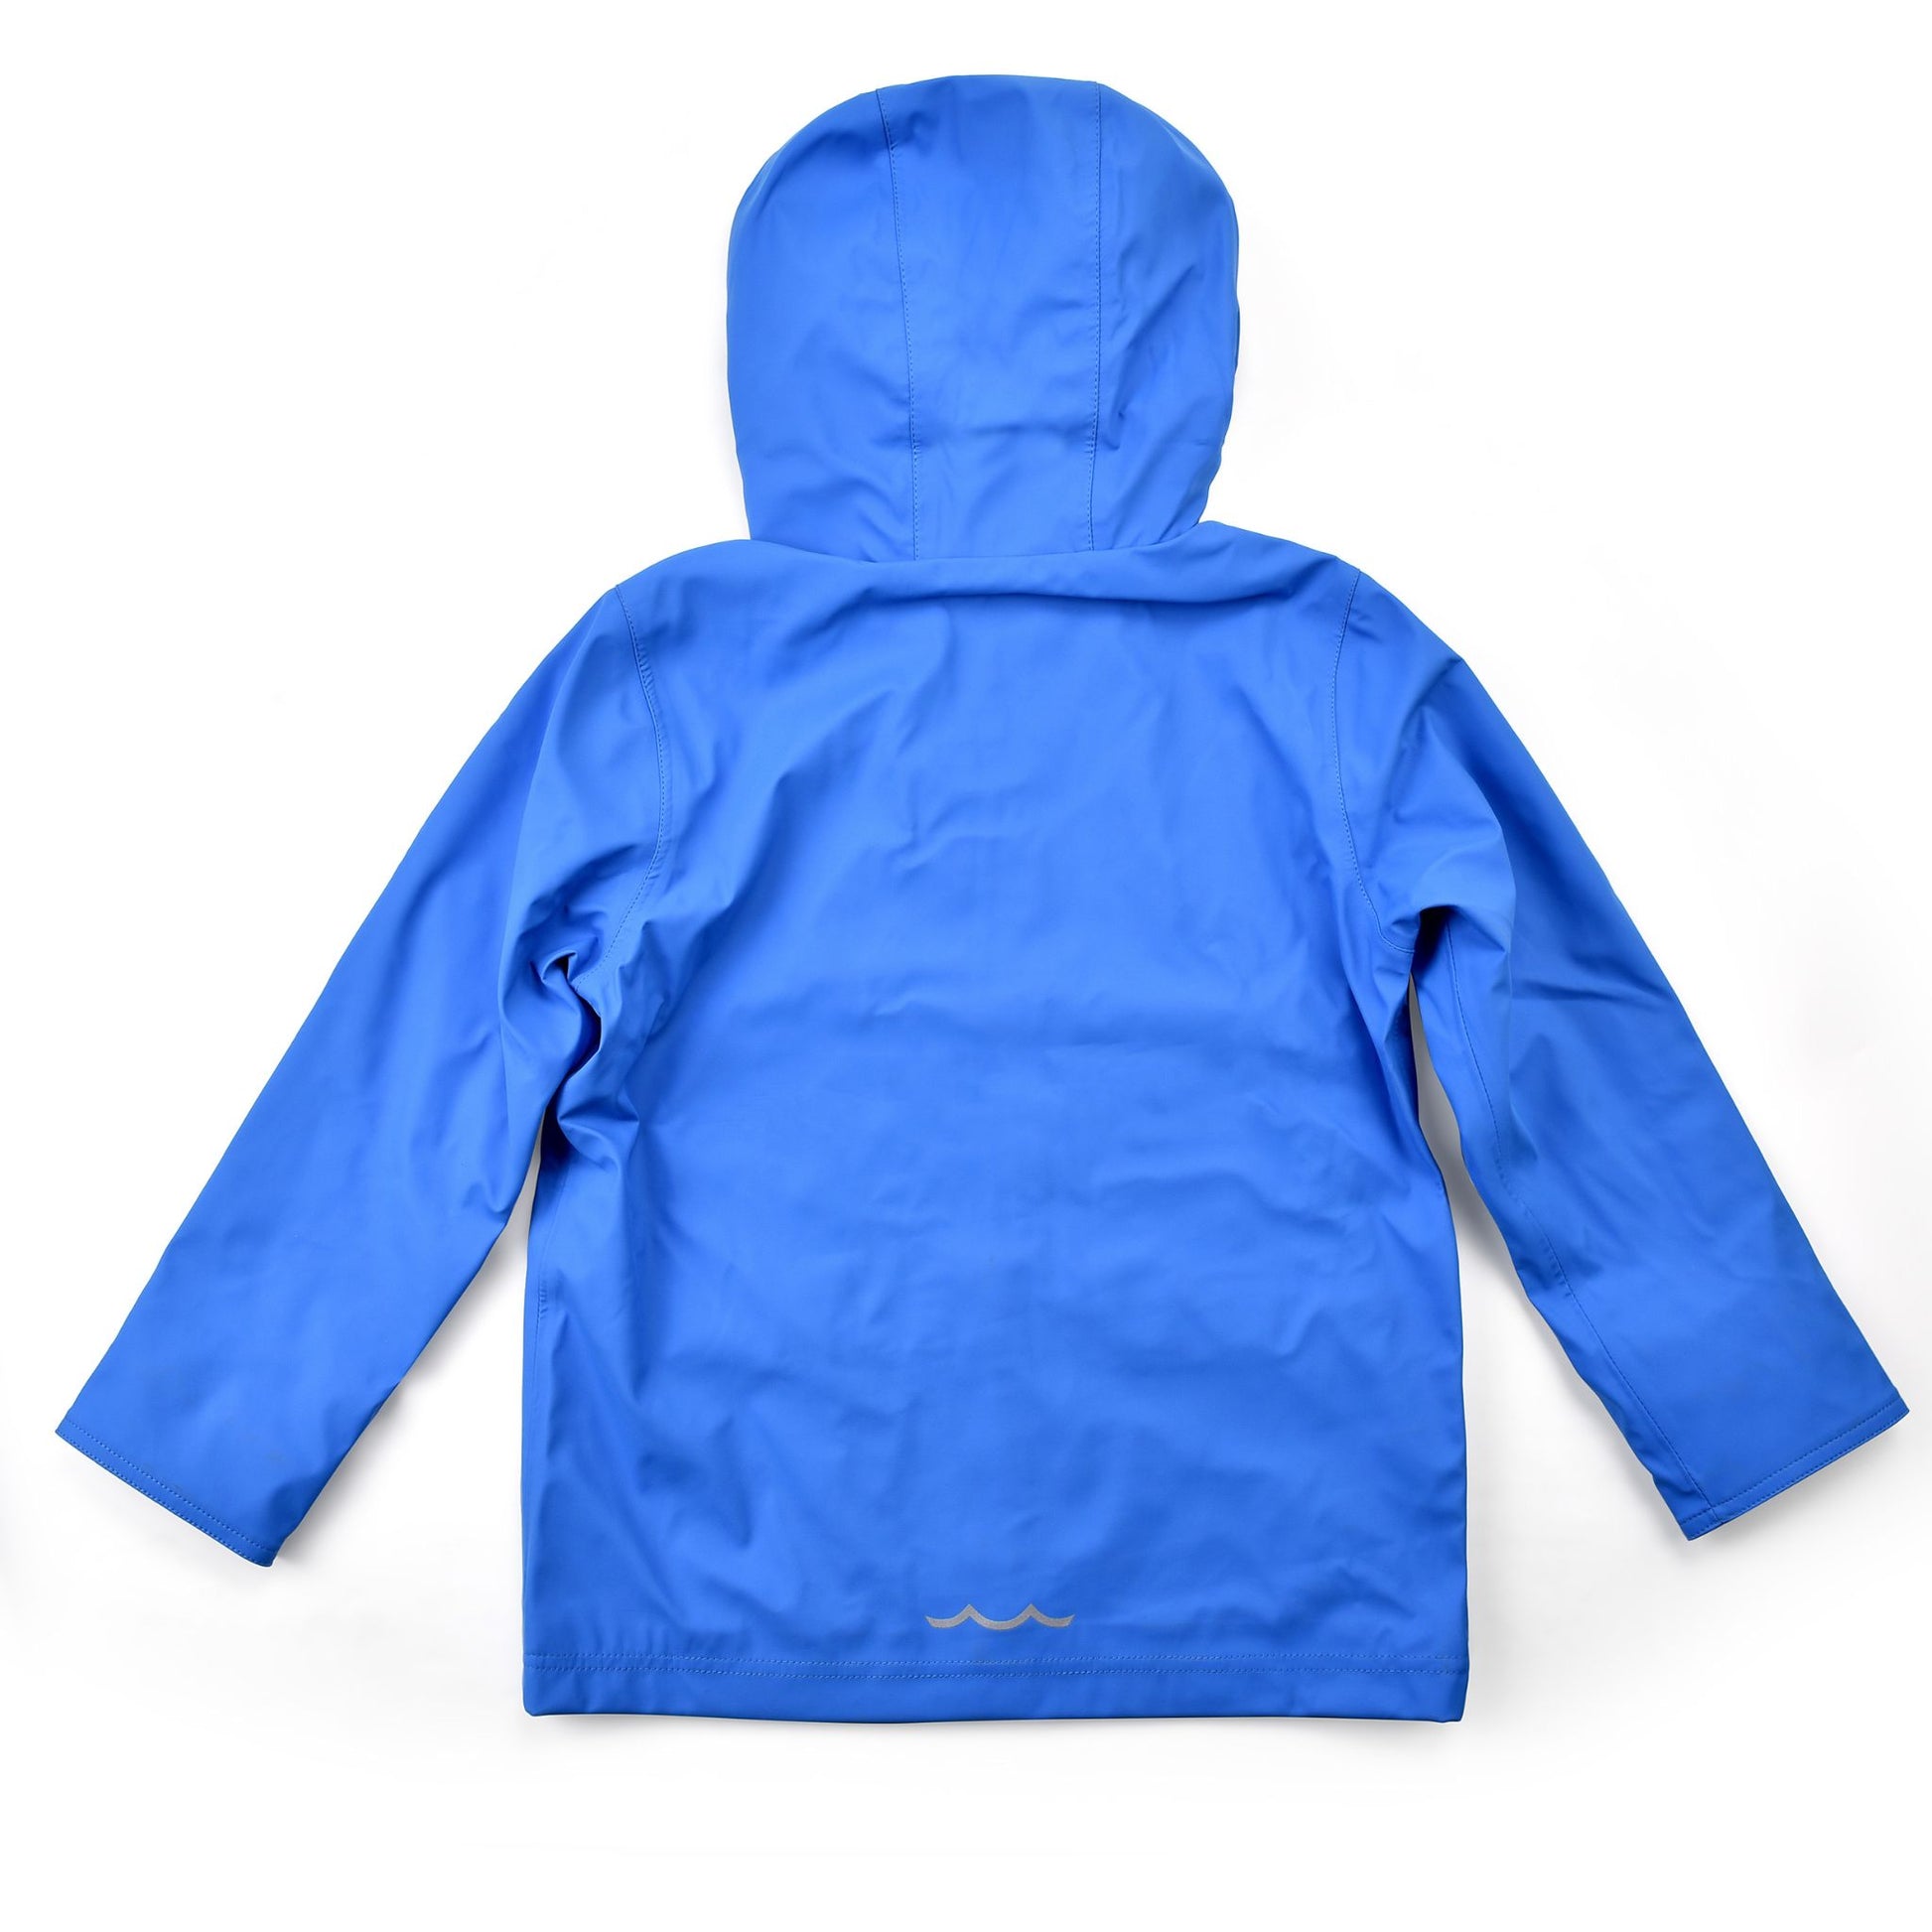 The back of a Blue Raincoat 